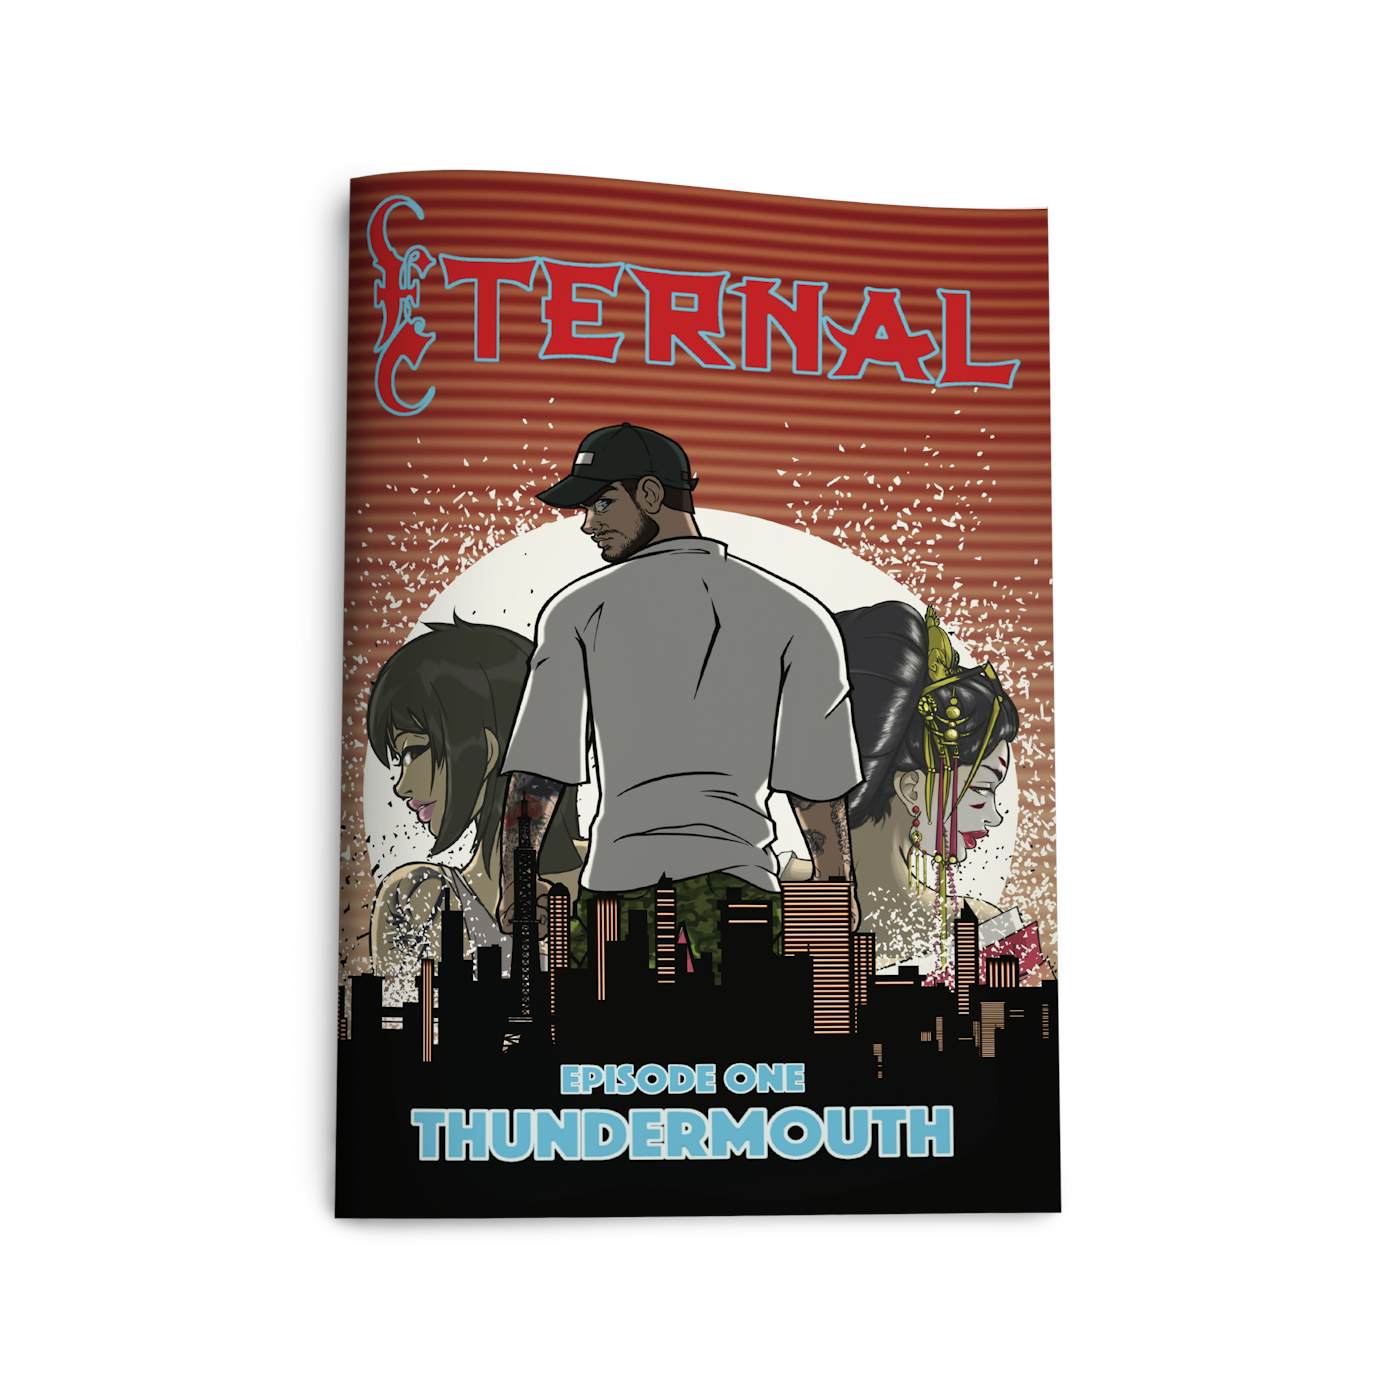 Emmure - Eternal EP. 1 Thundermouth Comic Book (Vinyl)